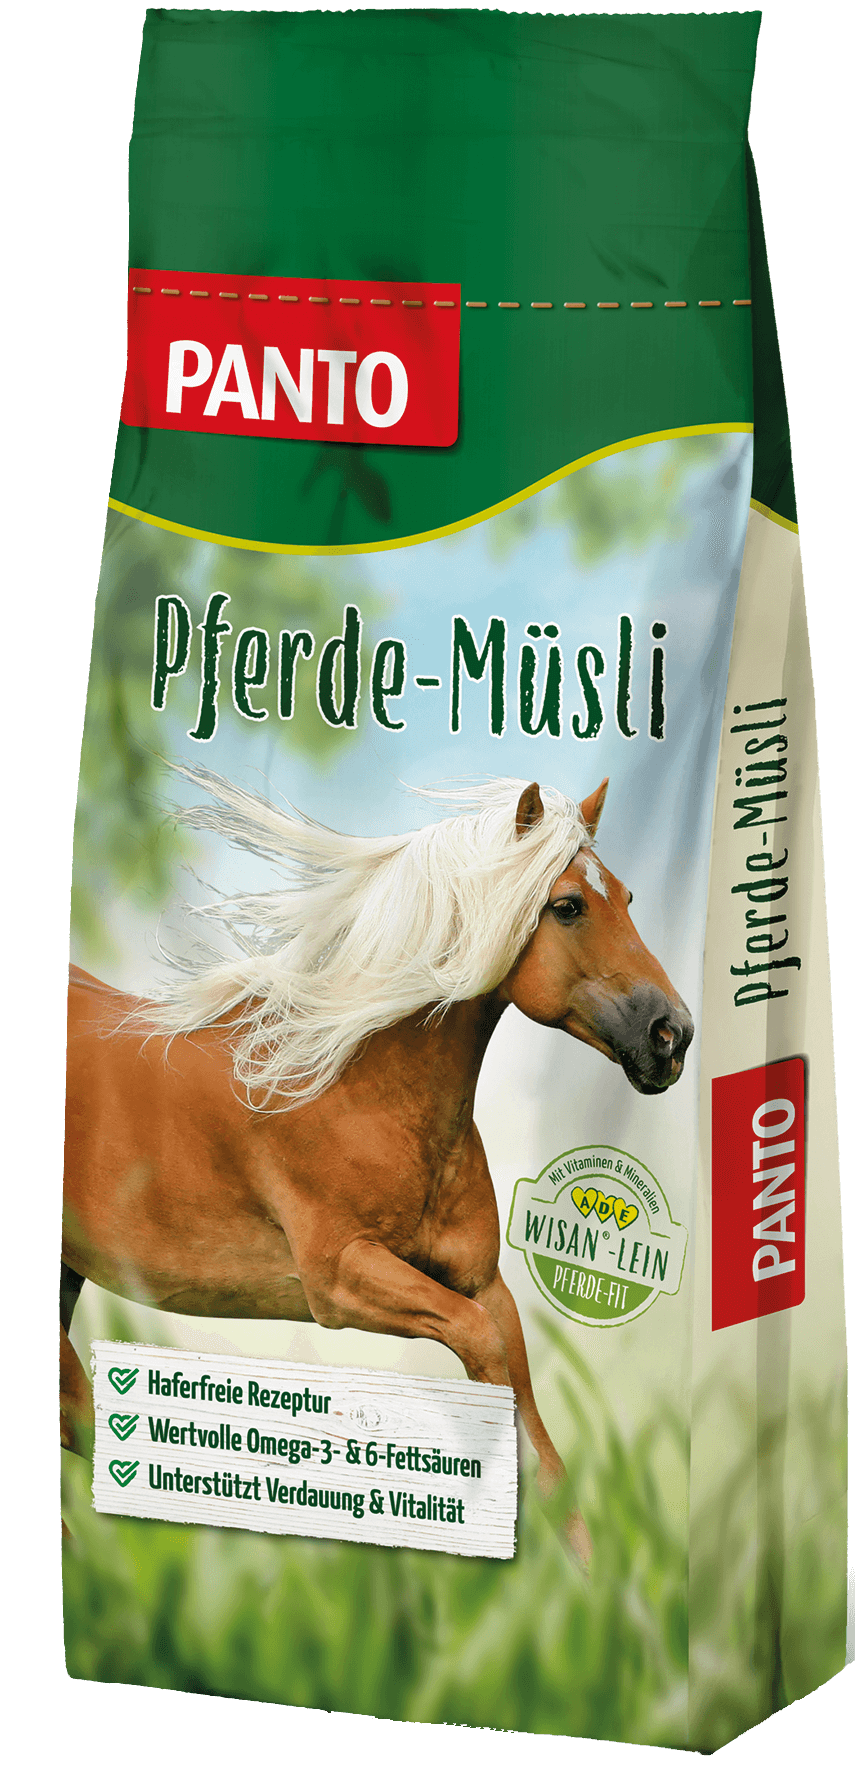 PANTO® Pferdemüsli mit Wisan®-Lein